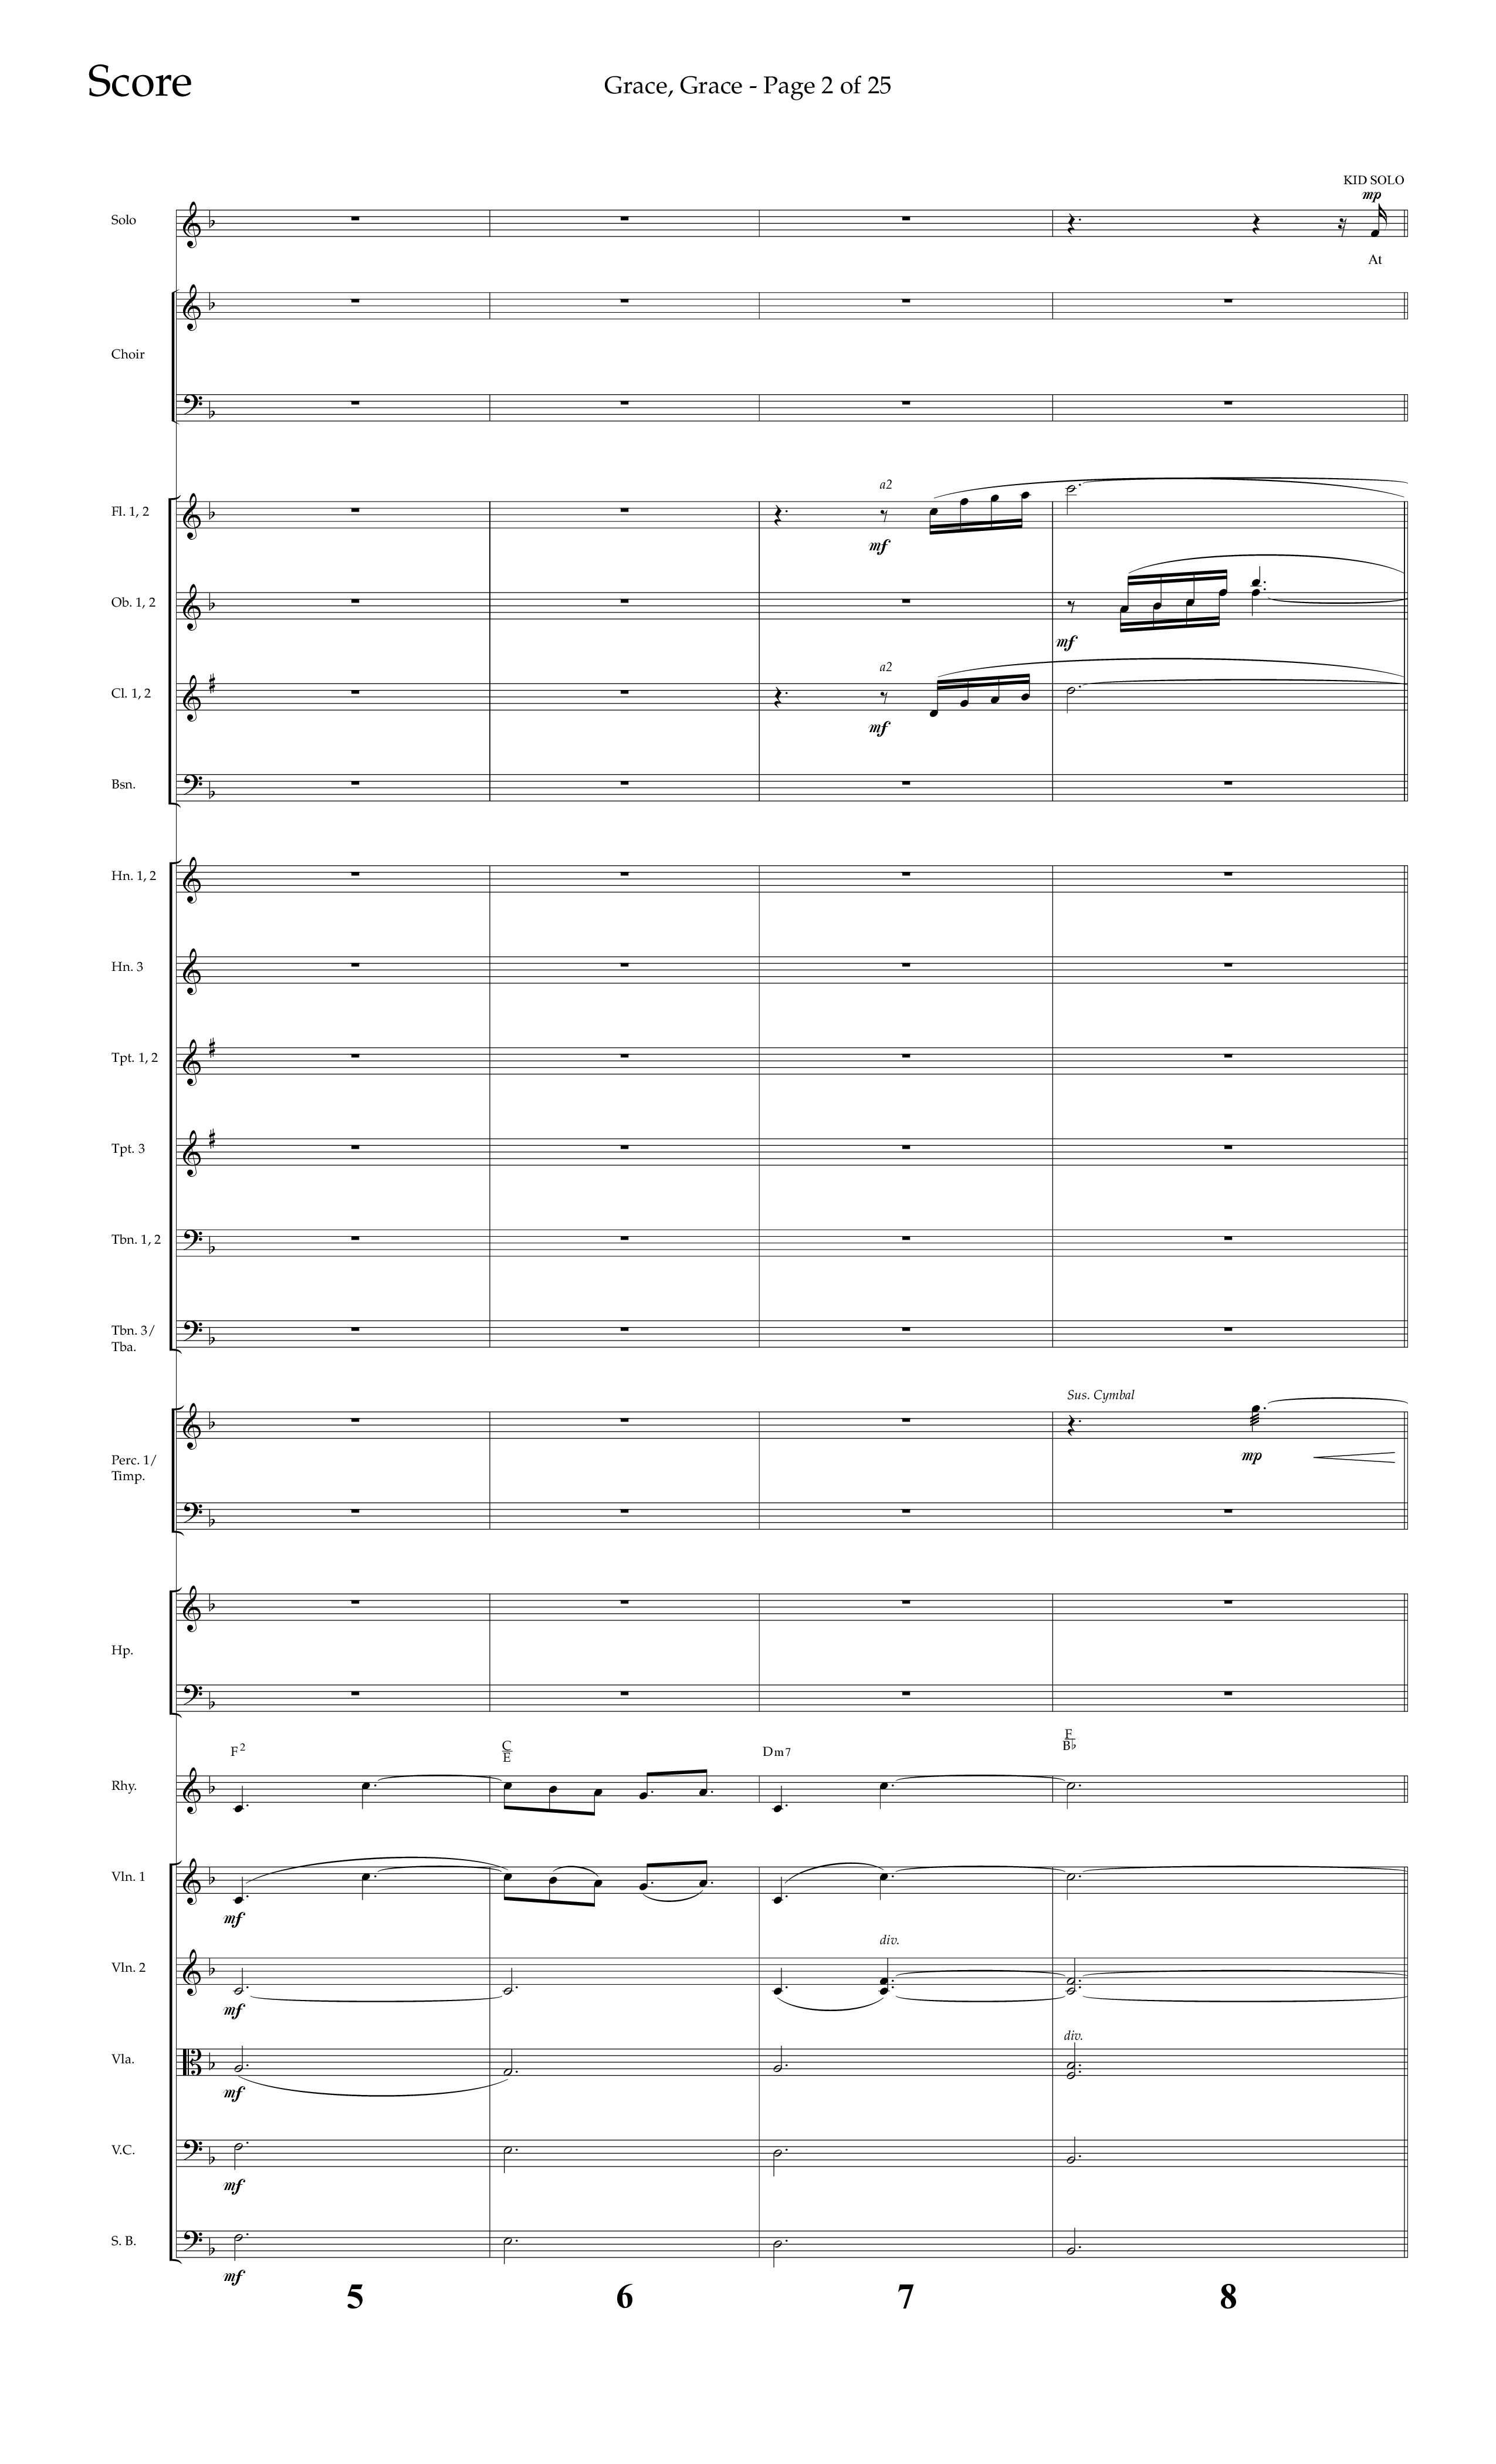 Grace Grace (Choral Anthem SATB) Conductor's Score (Lifeway Choral / Arr. John Bolin / Arr. Don Koch / Arr. Eric Belvin / Orch. Daniel Semsen)